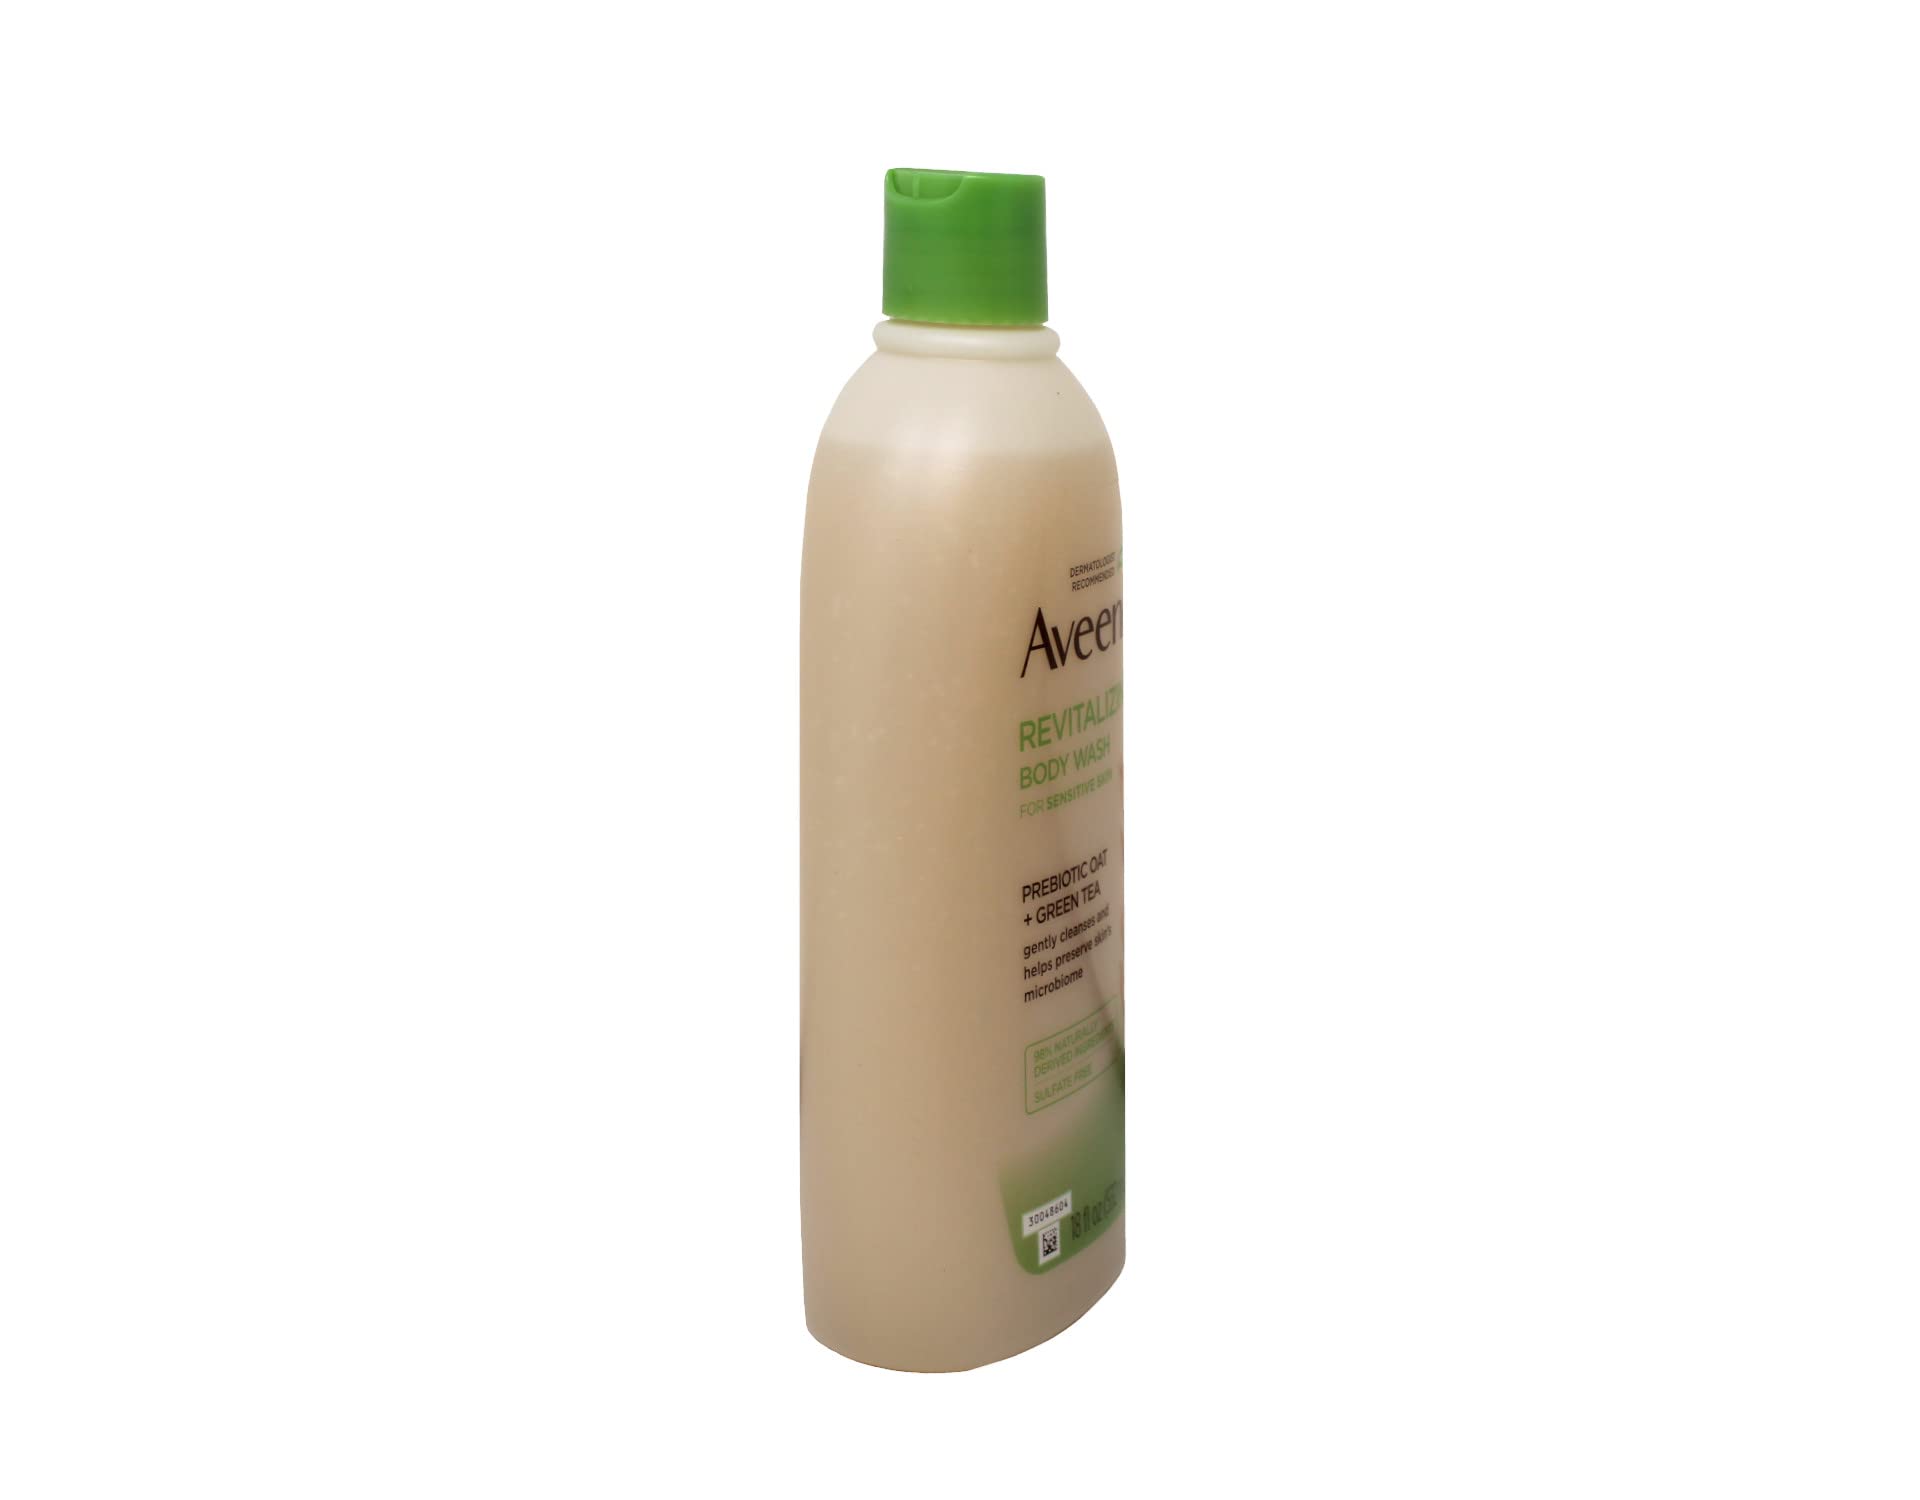 Aveeno Revitalizing Body Wash Prebiotic Oat + Green Tea 18 Ounce